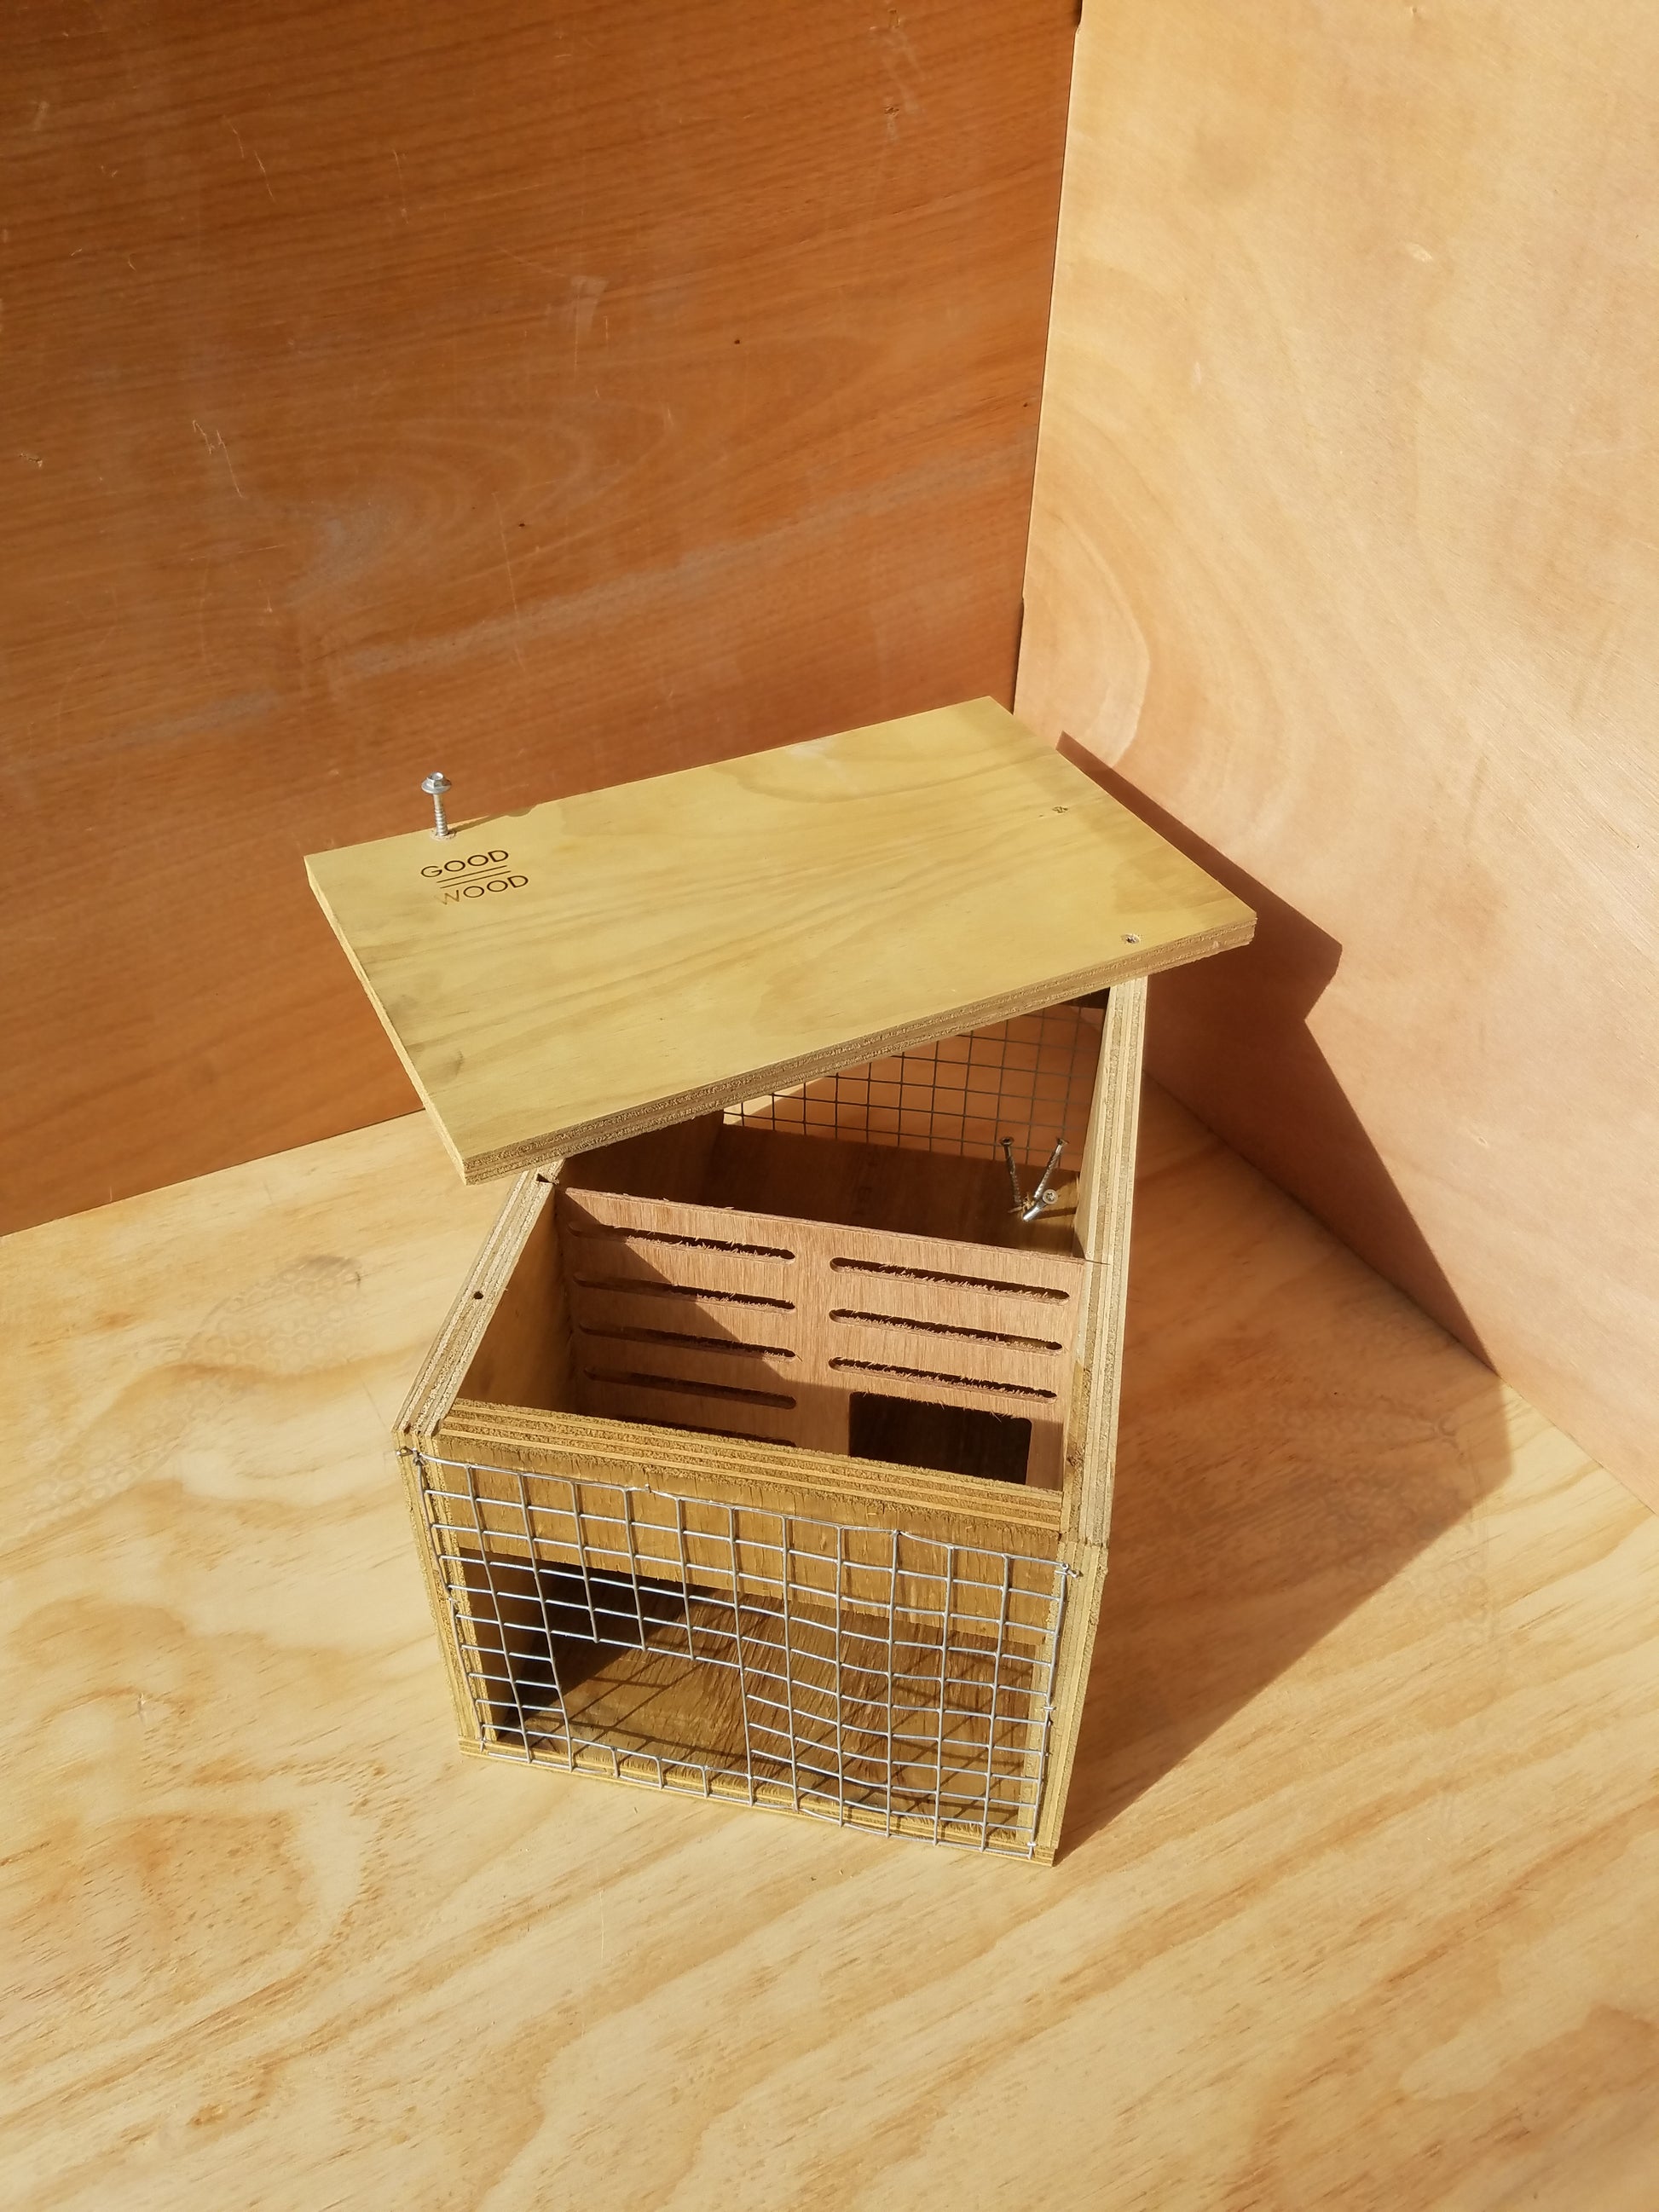 doc200 trap box stoats rats wood